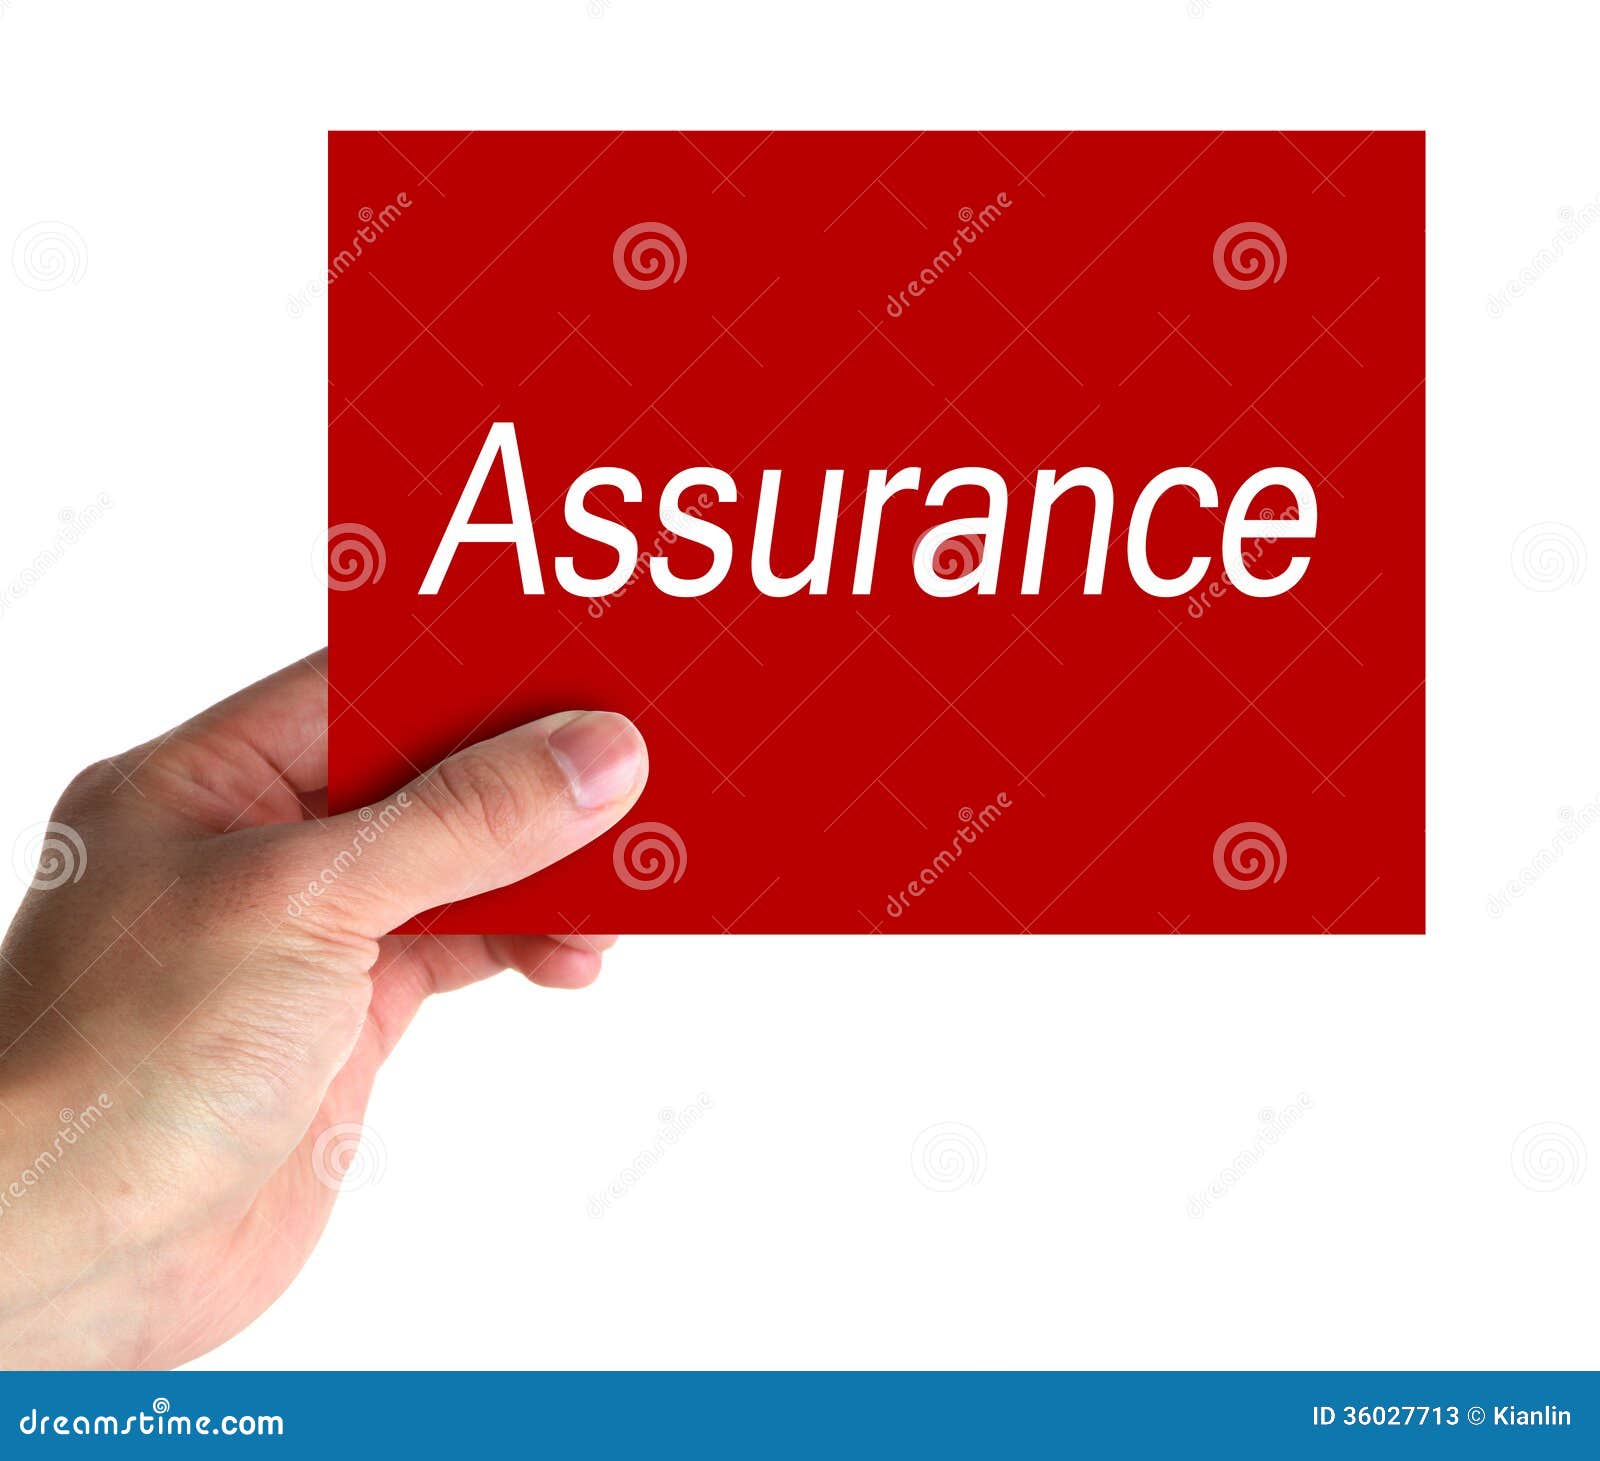 assurance concept